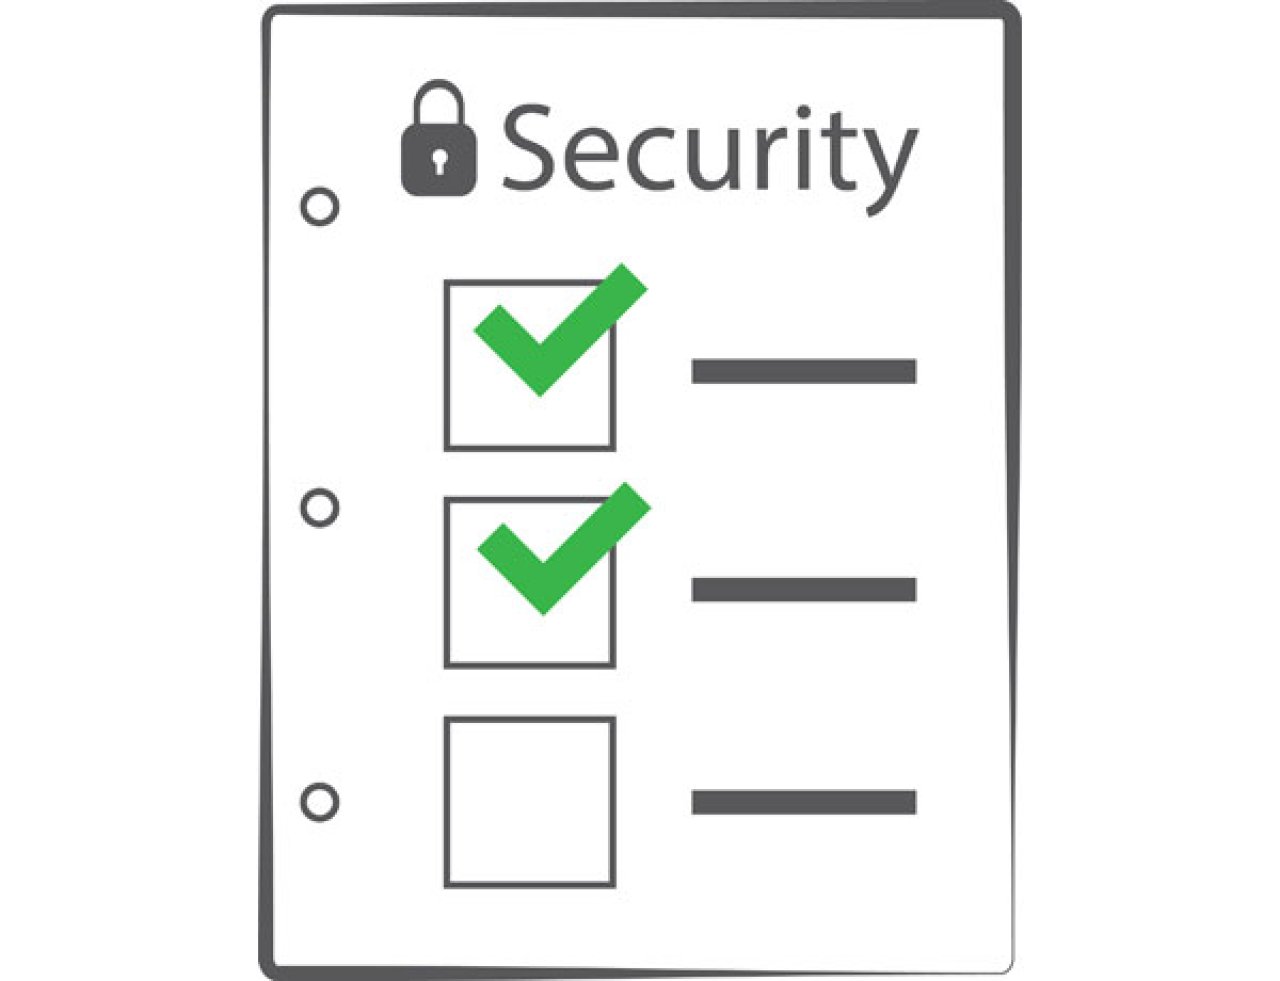 filemaker security checklist.